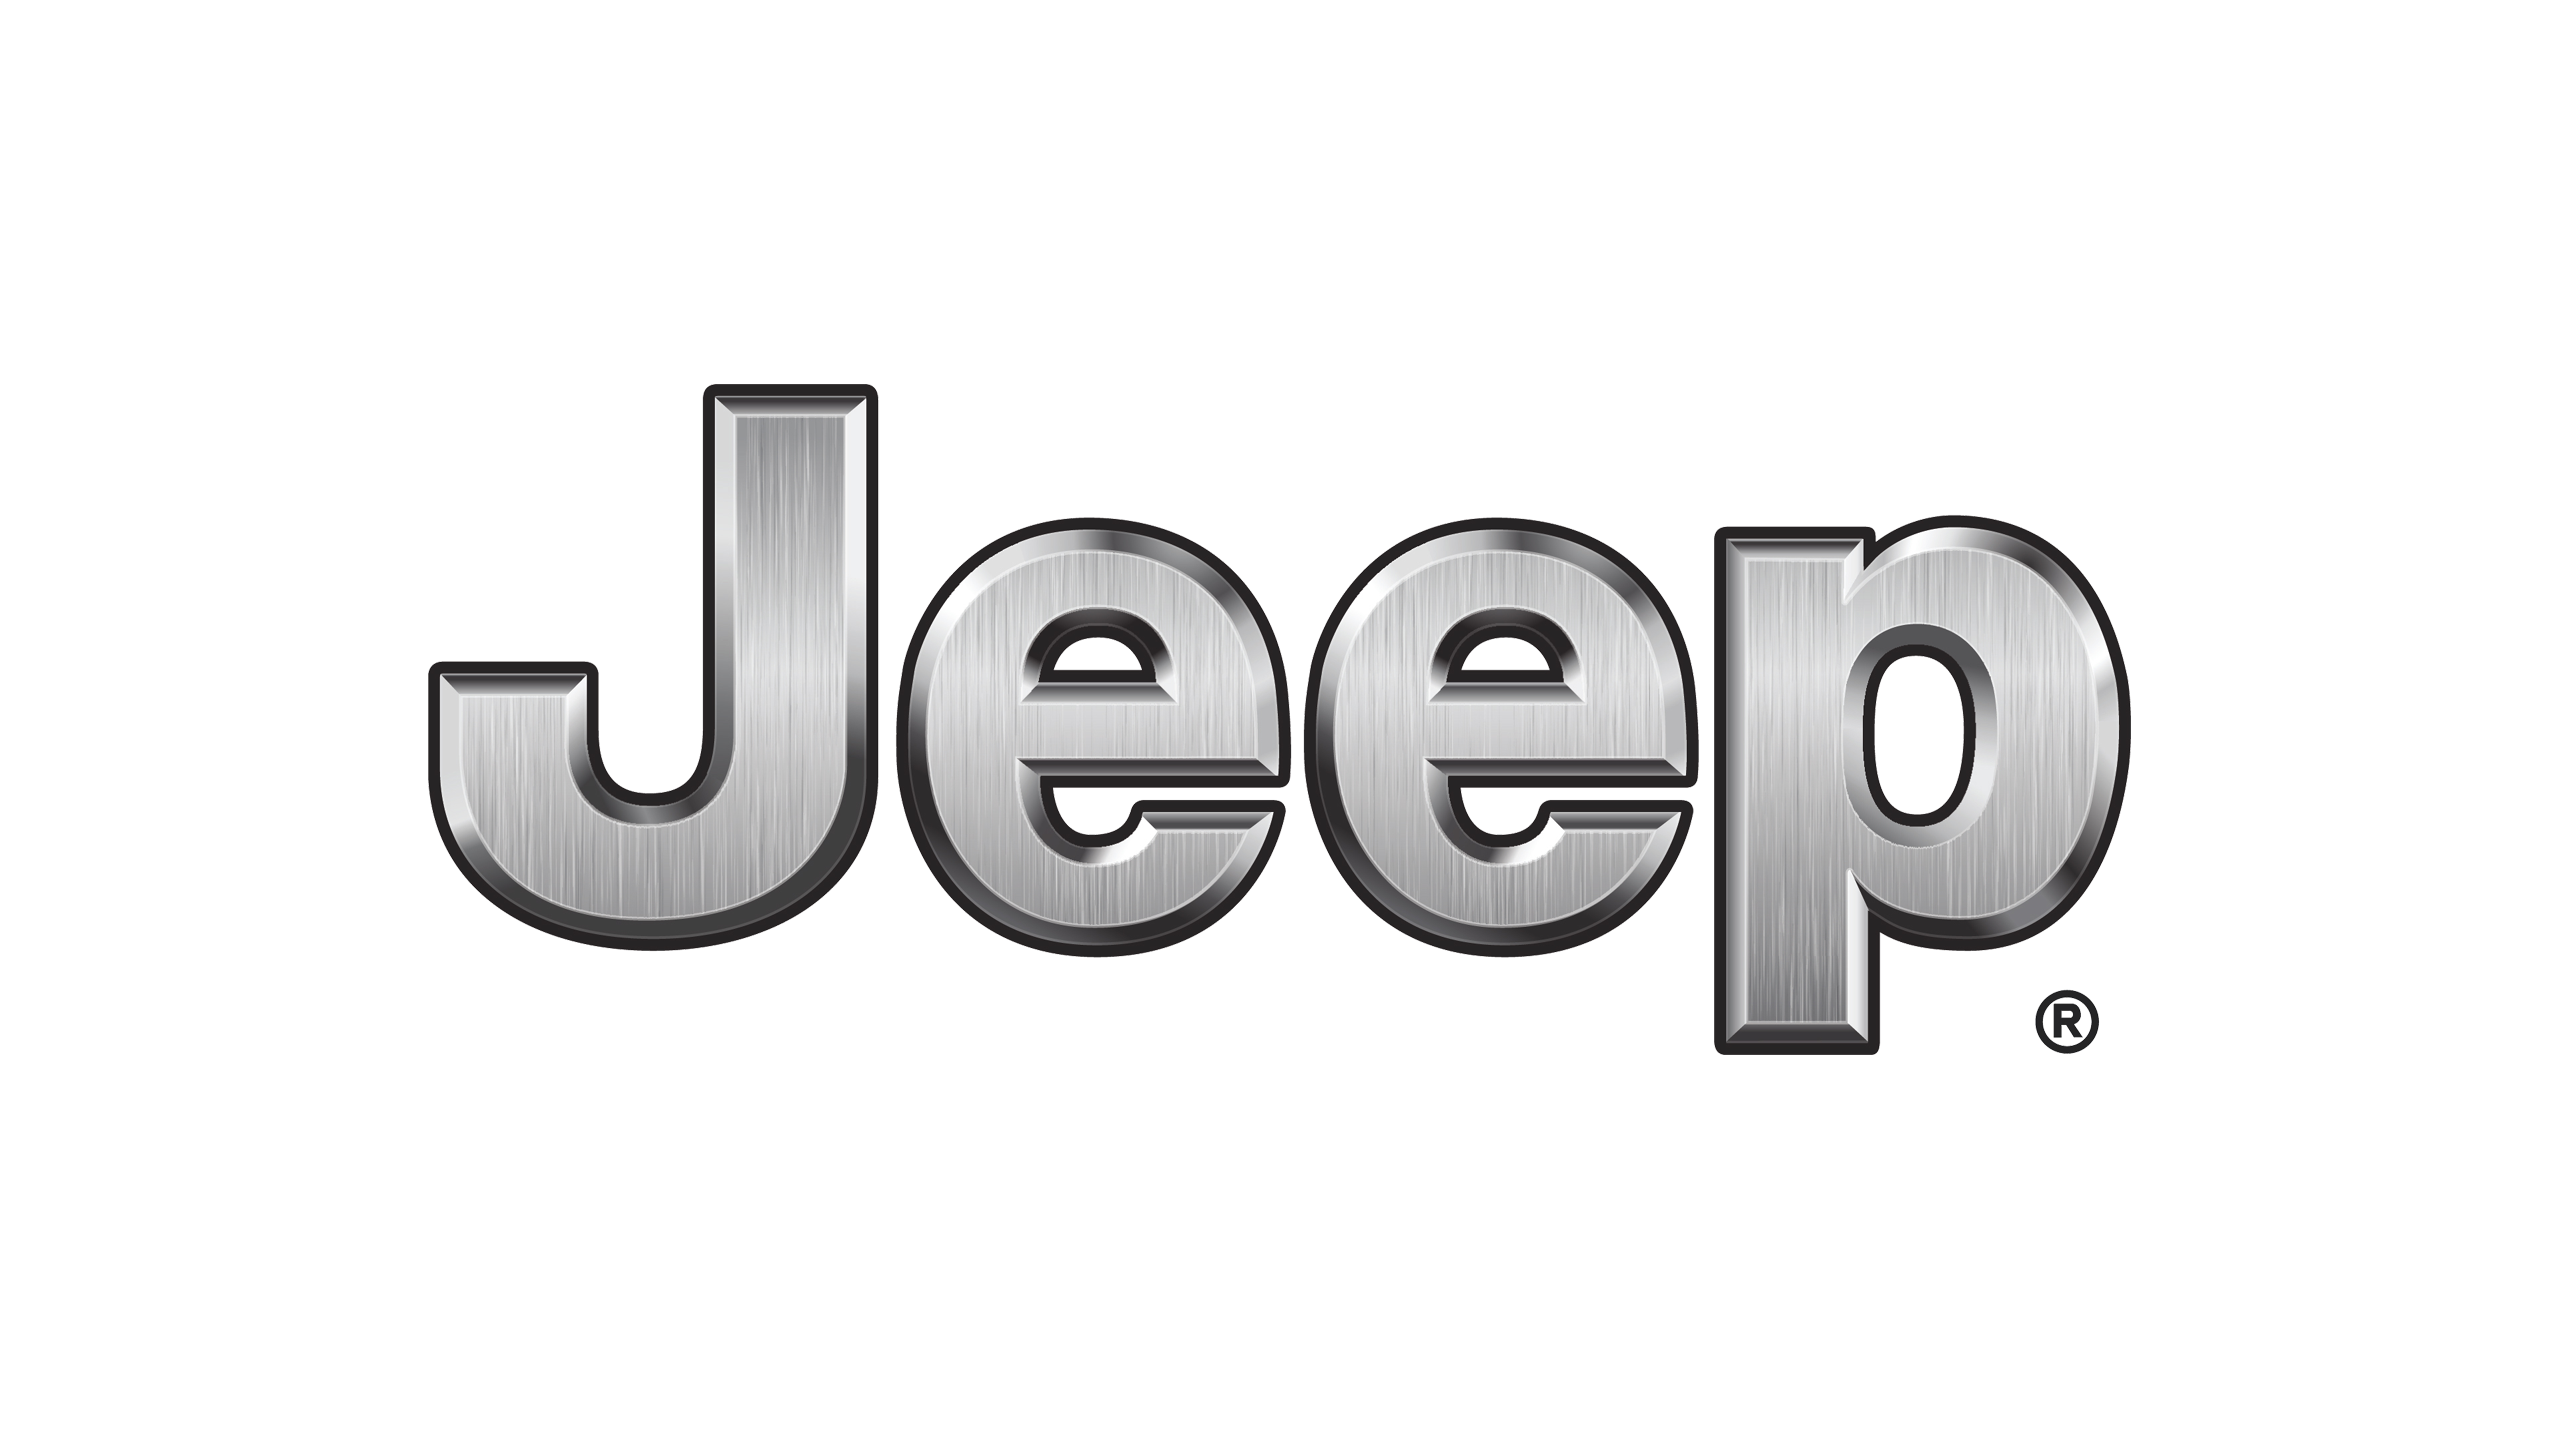 Download Jeep Logo Png Transp